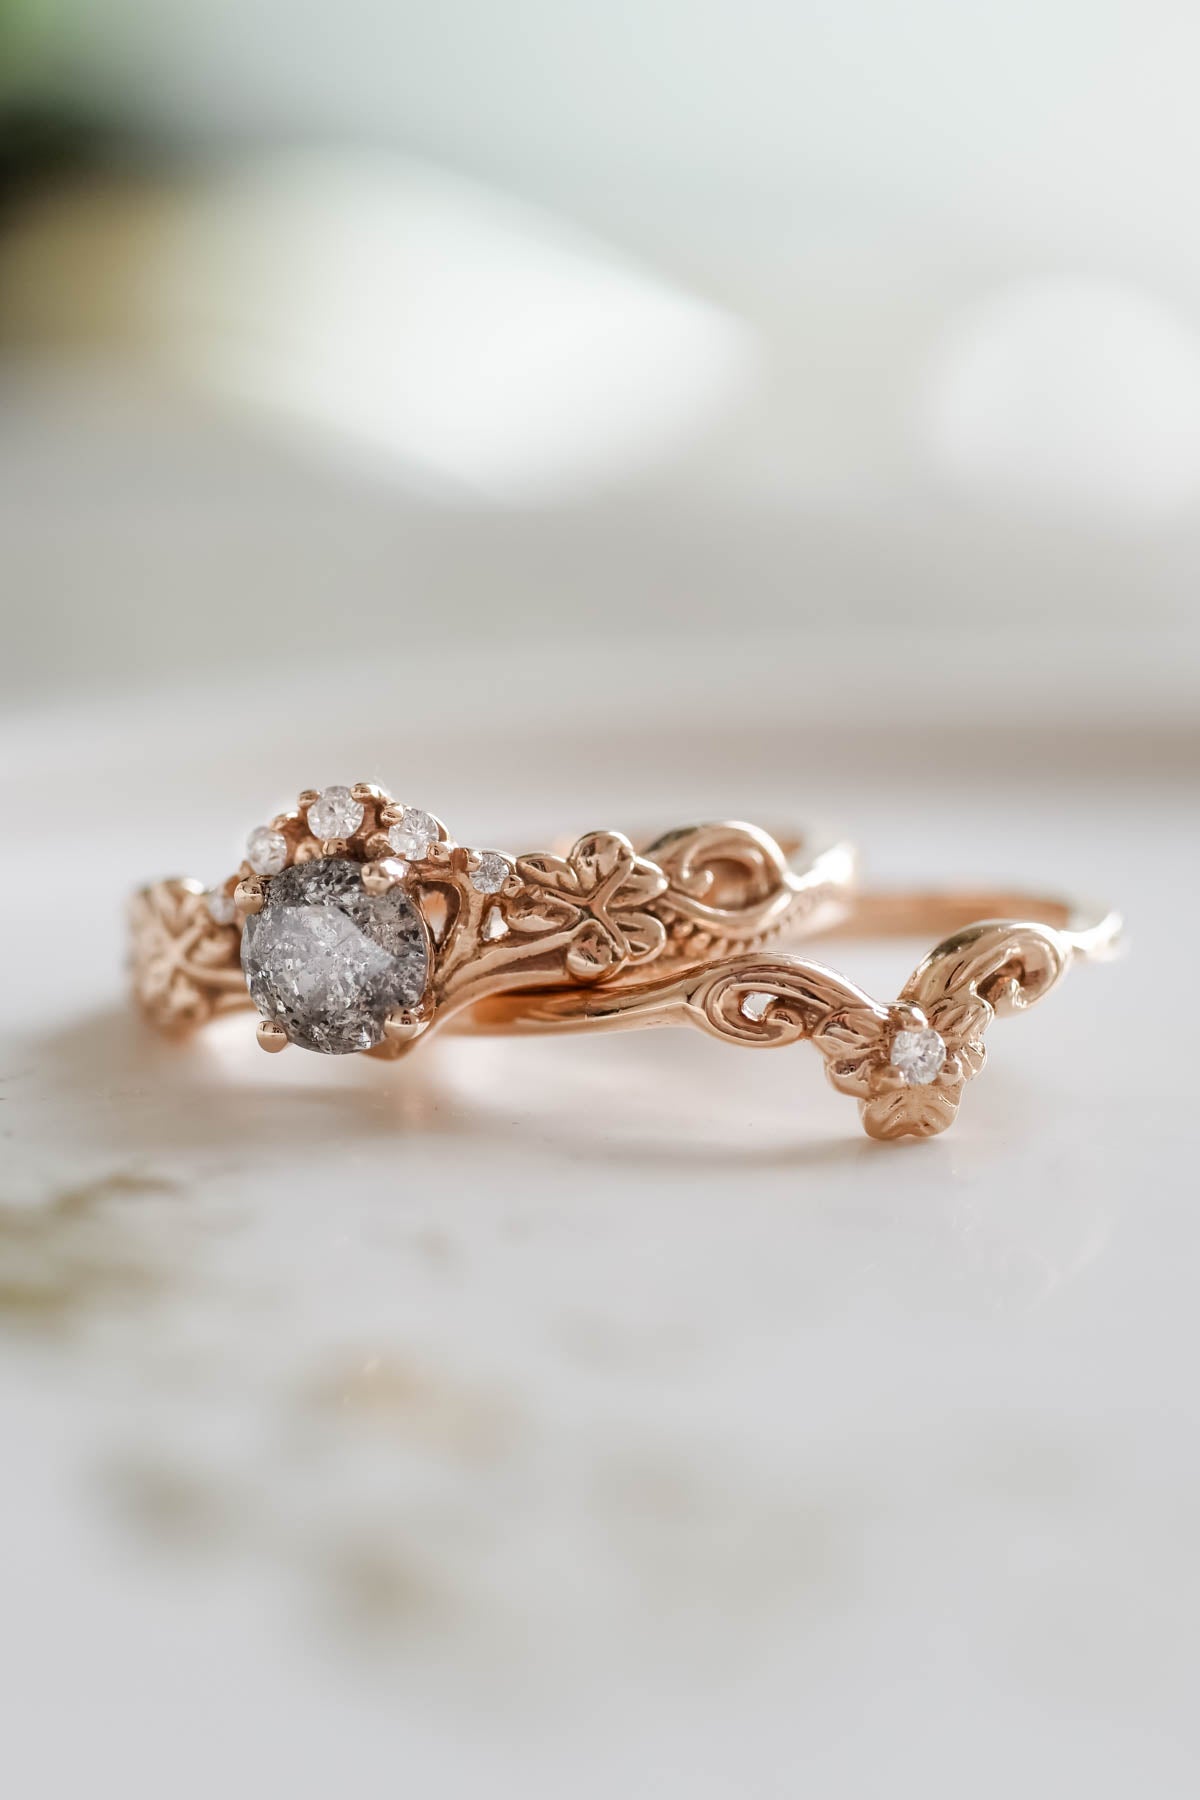 Elvish engagement ring with salt and pepper diamond / Horta - Eden Garden Jewelry™